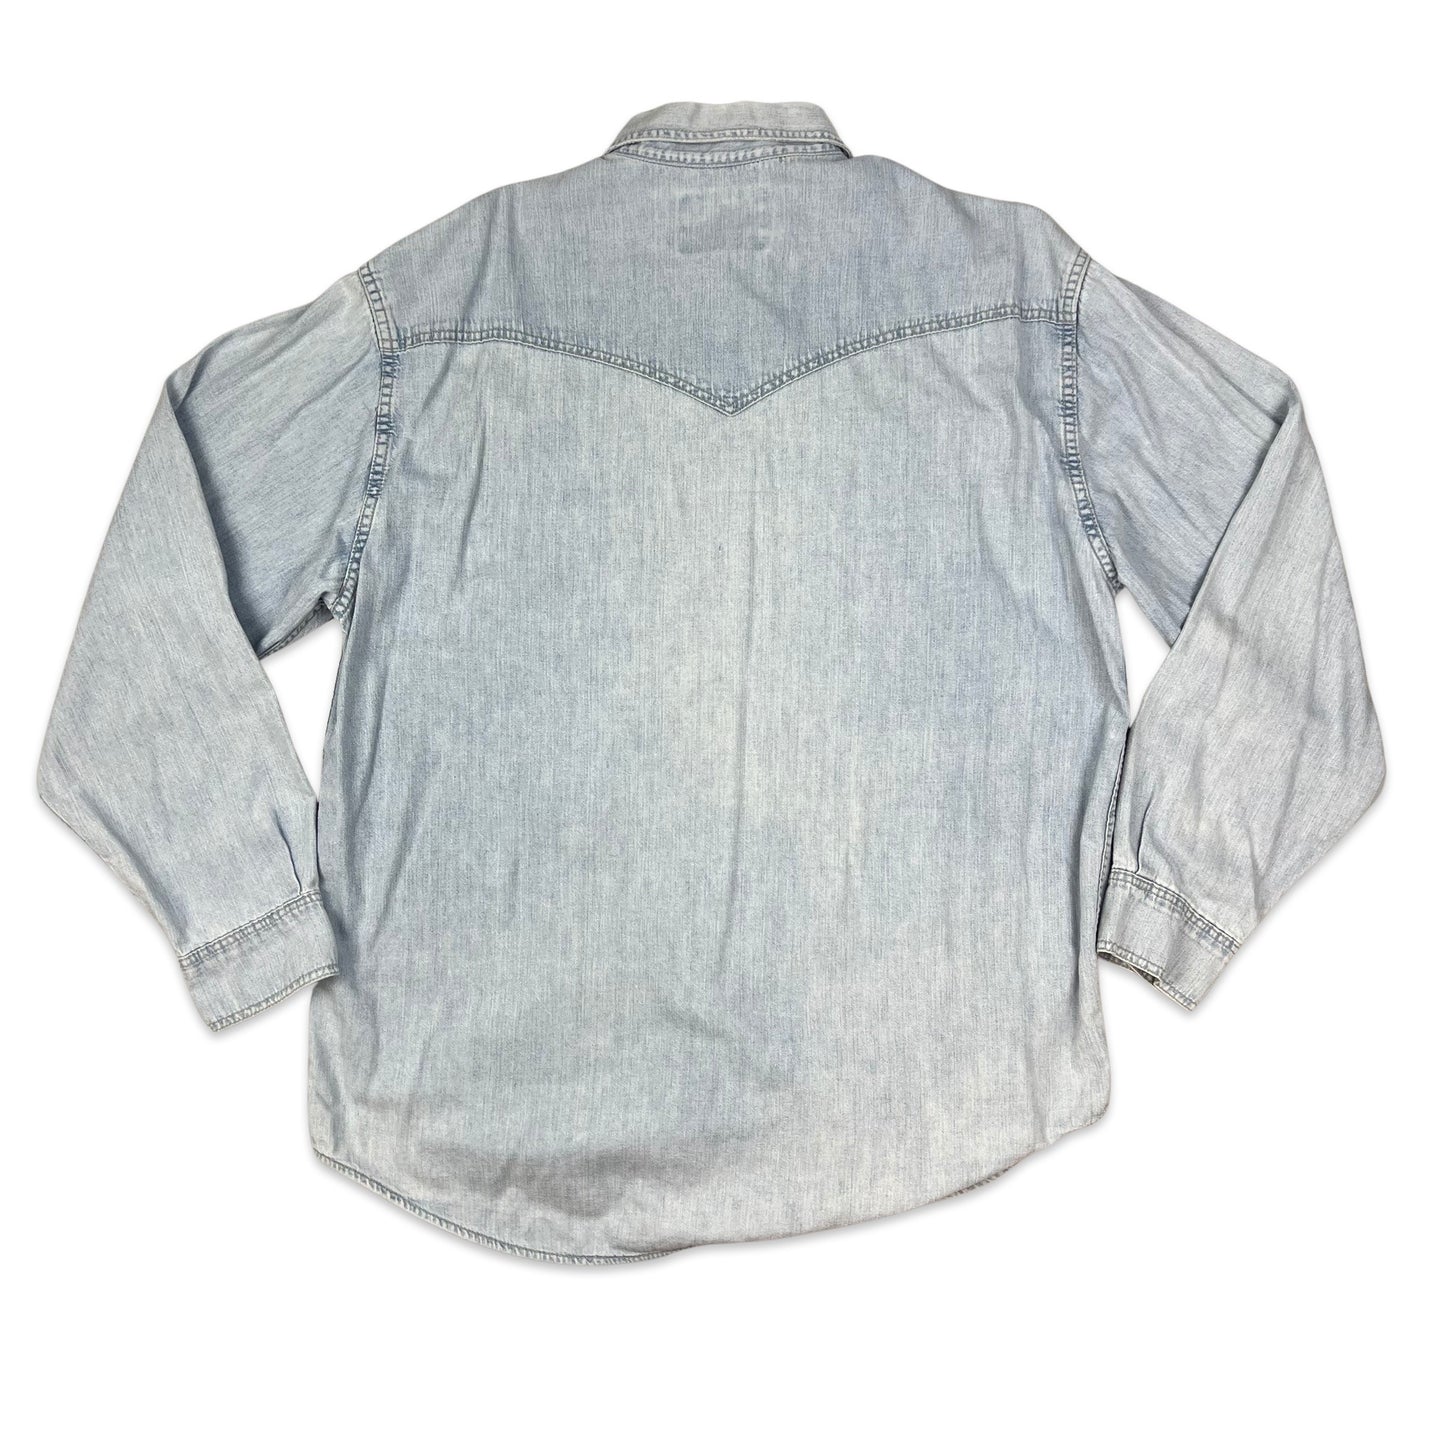 Wrangler Light Blue Denim Shirt L XL